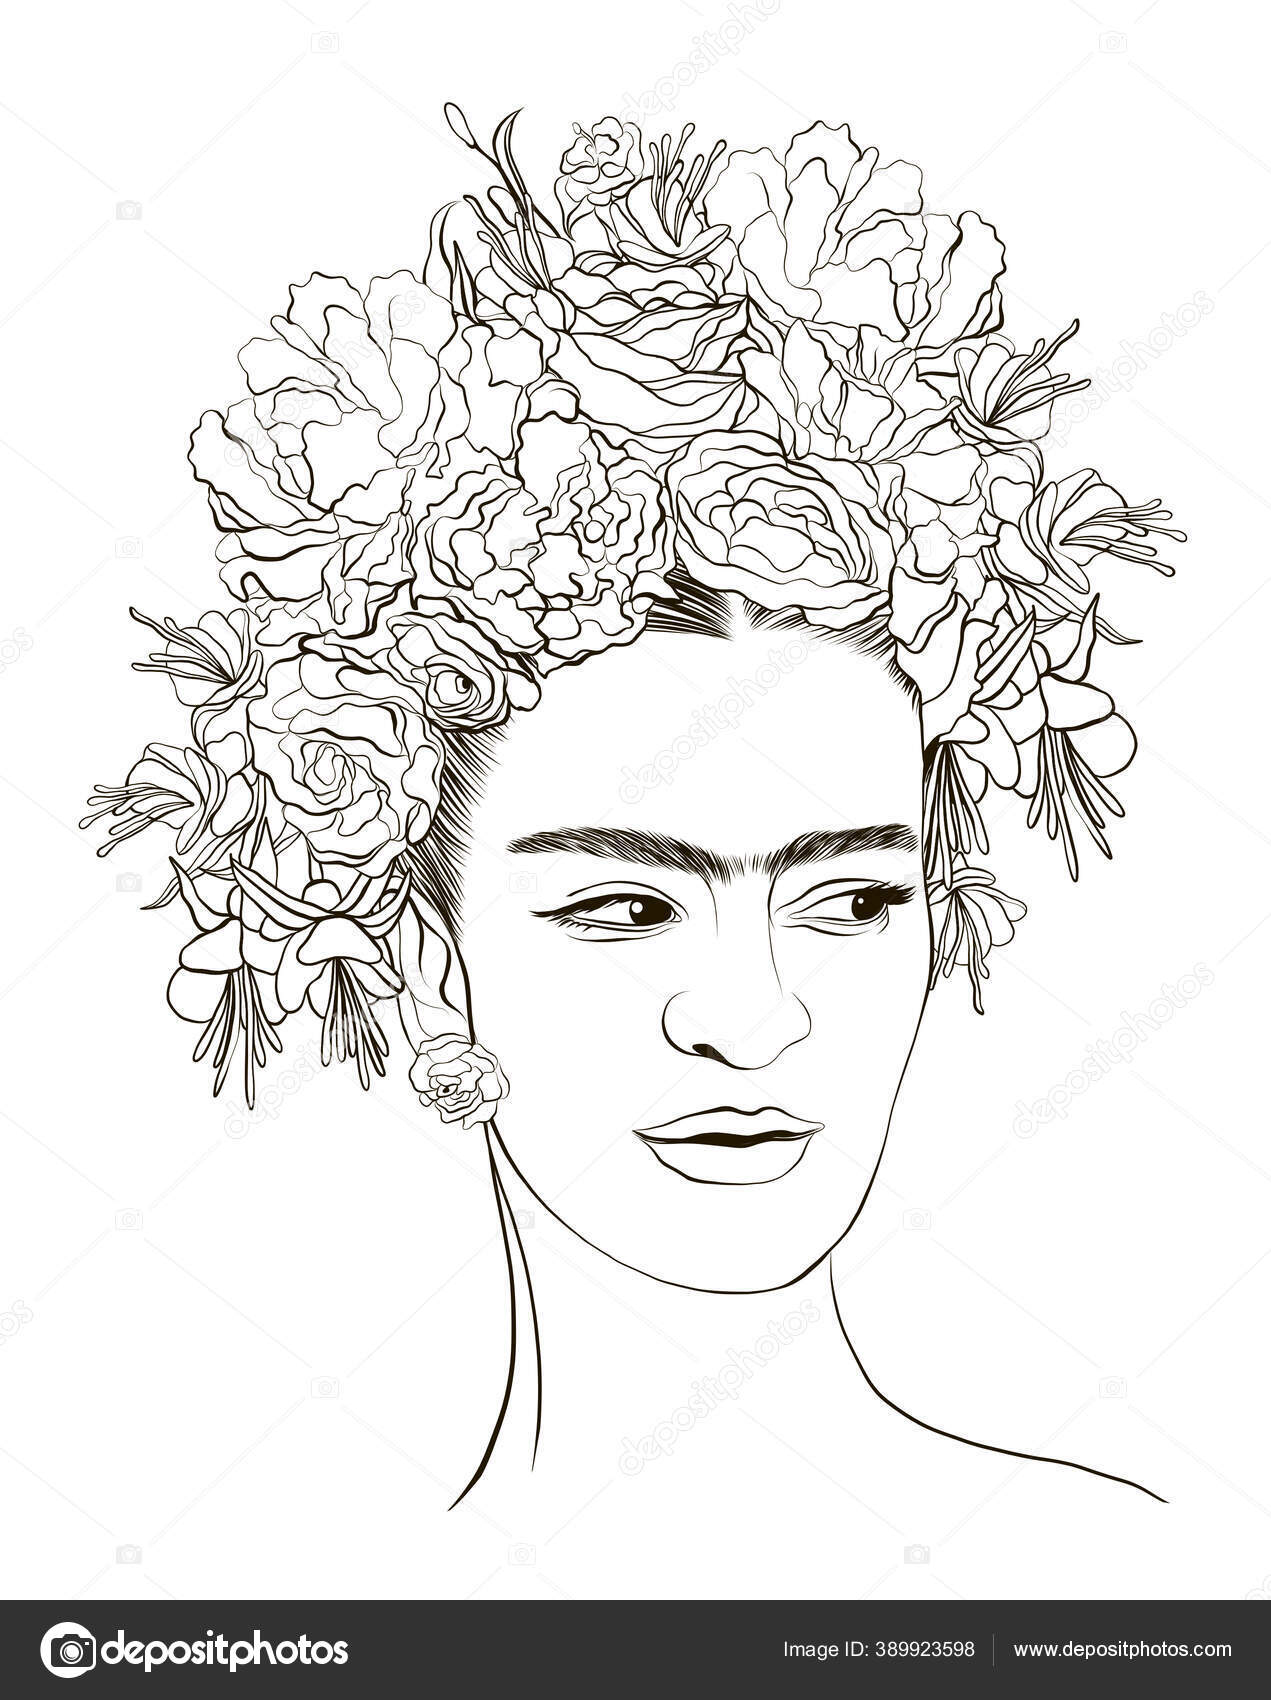 Frida kahlo dibujo imágenes de stock de arte vectorial | Depositphotos